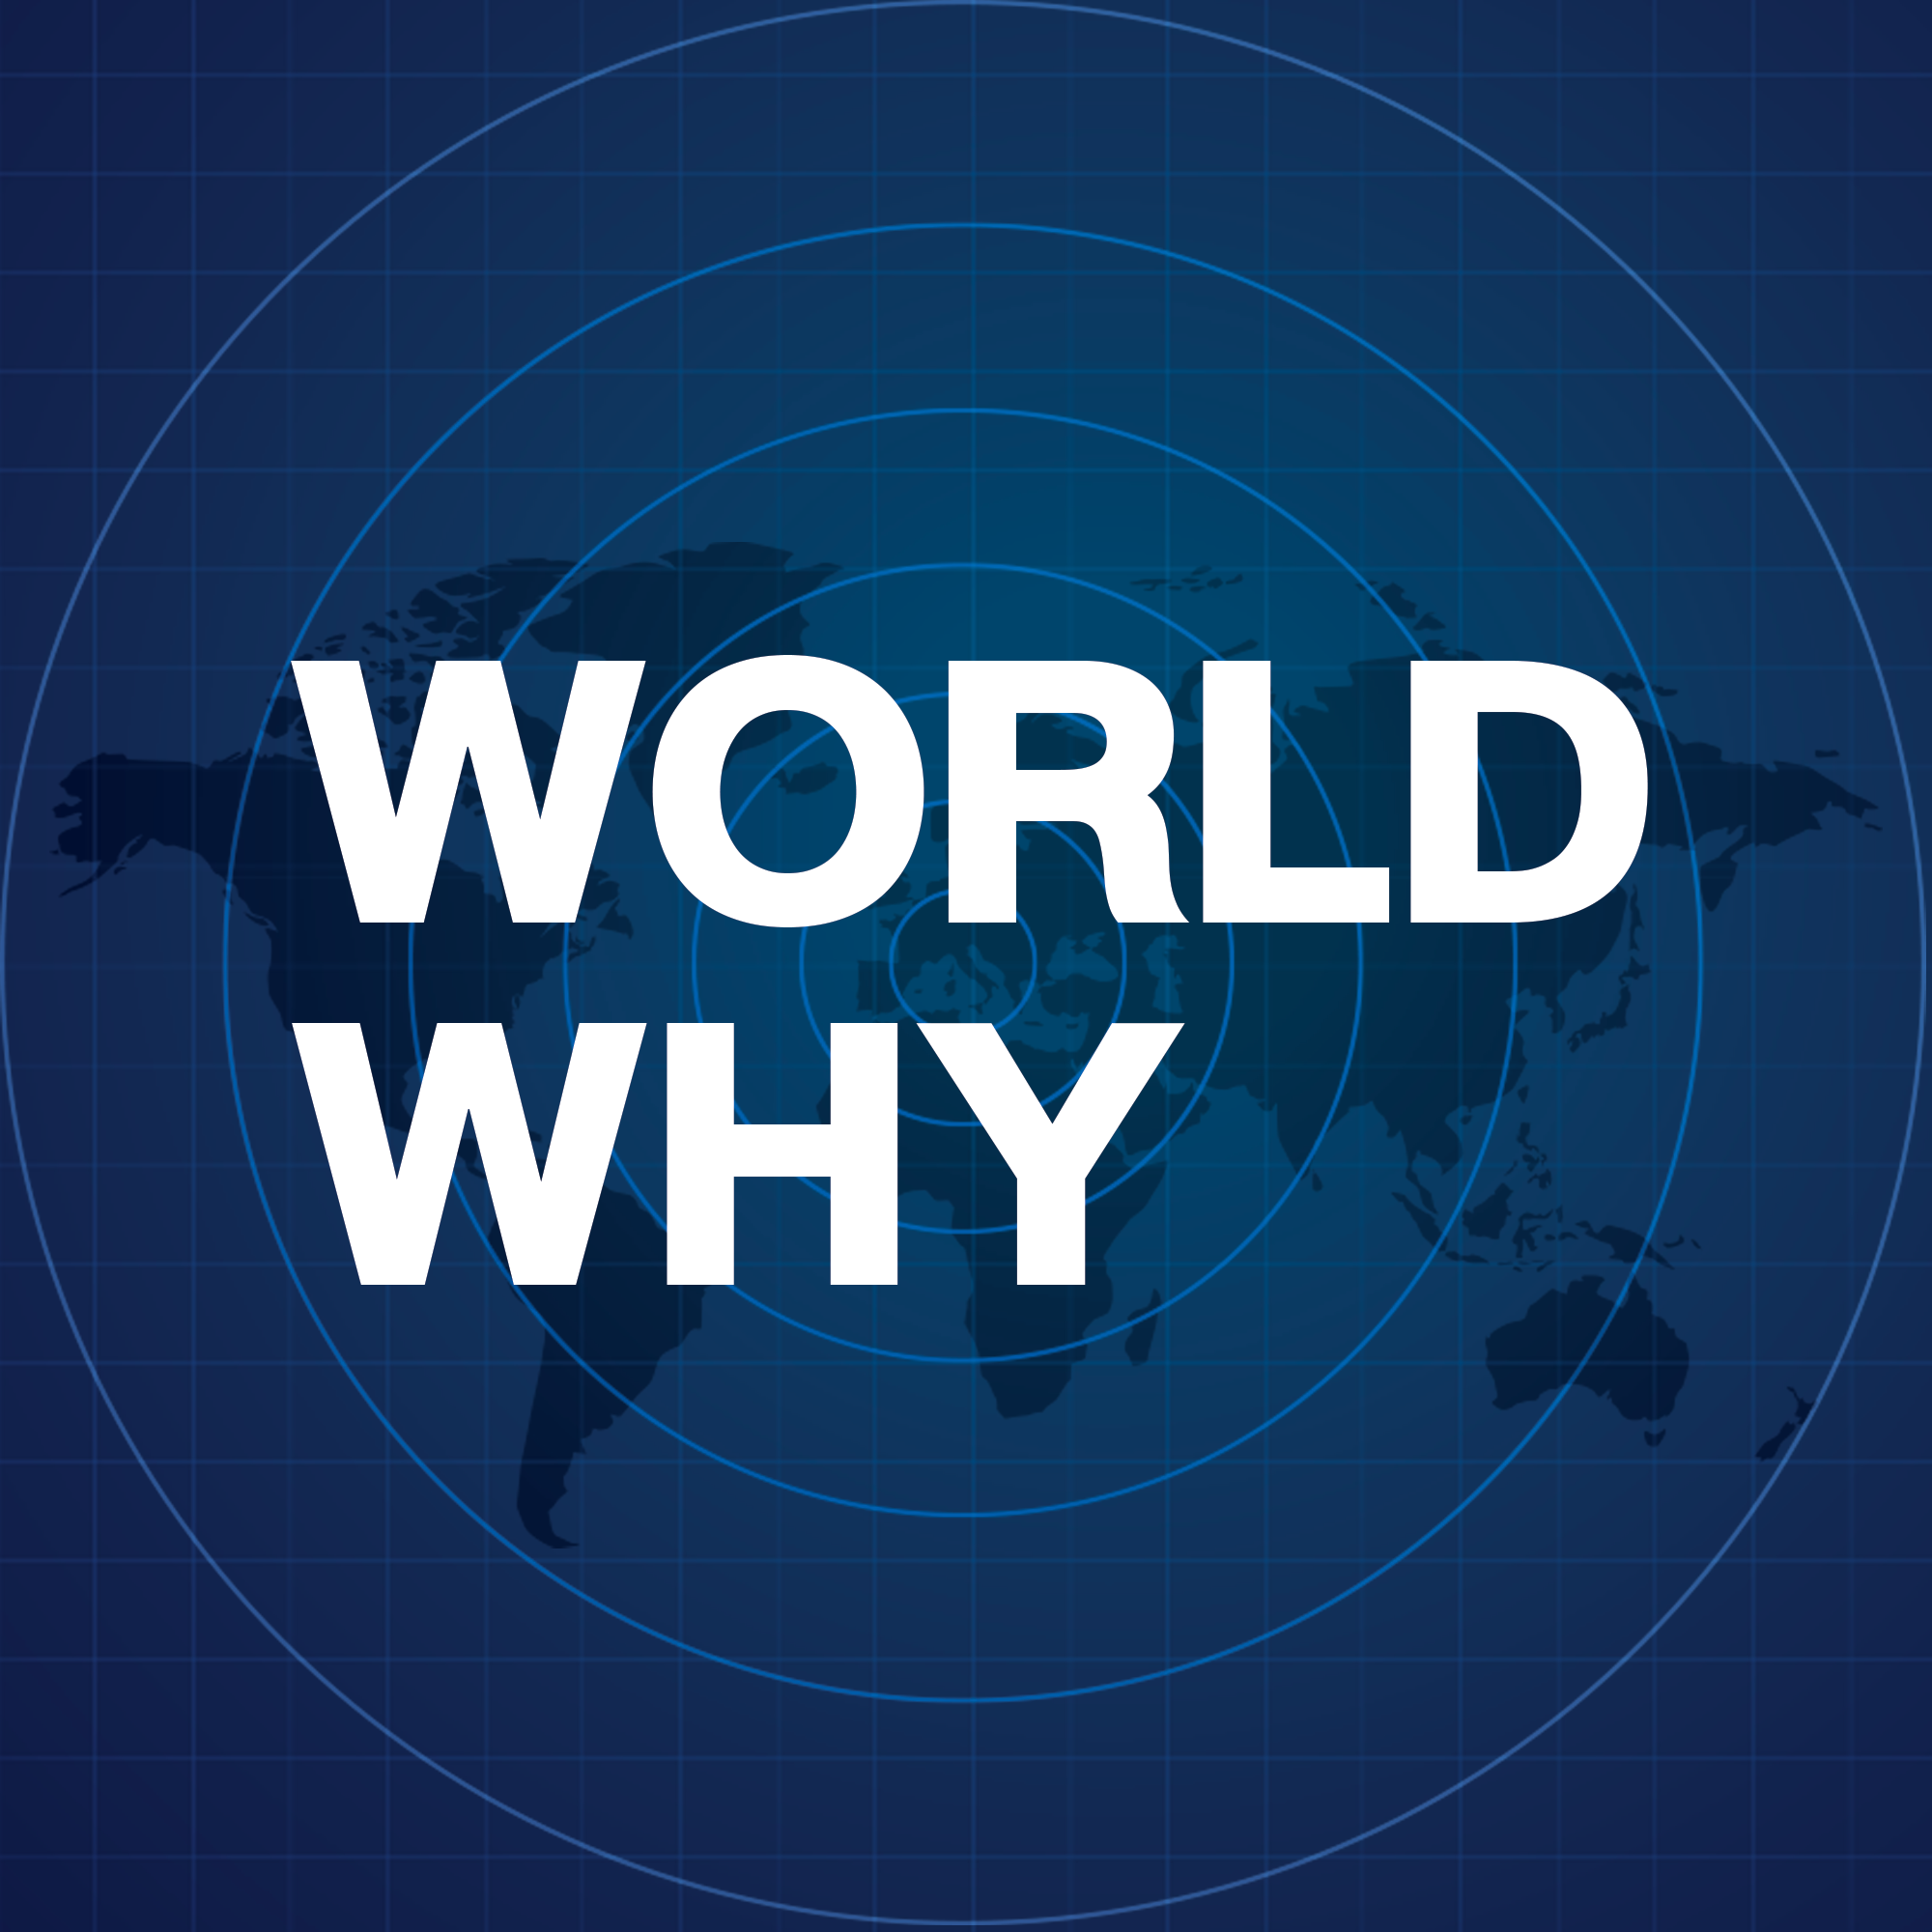 WORLD WHY LIVE | ปฏิกิริยาโลกหลัง ‘คิม’ พบ ‘ปูติน’ รัสเซีย-เกาหลีเหนือ ไม่แคร์คว่ำบาตร